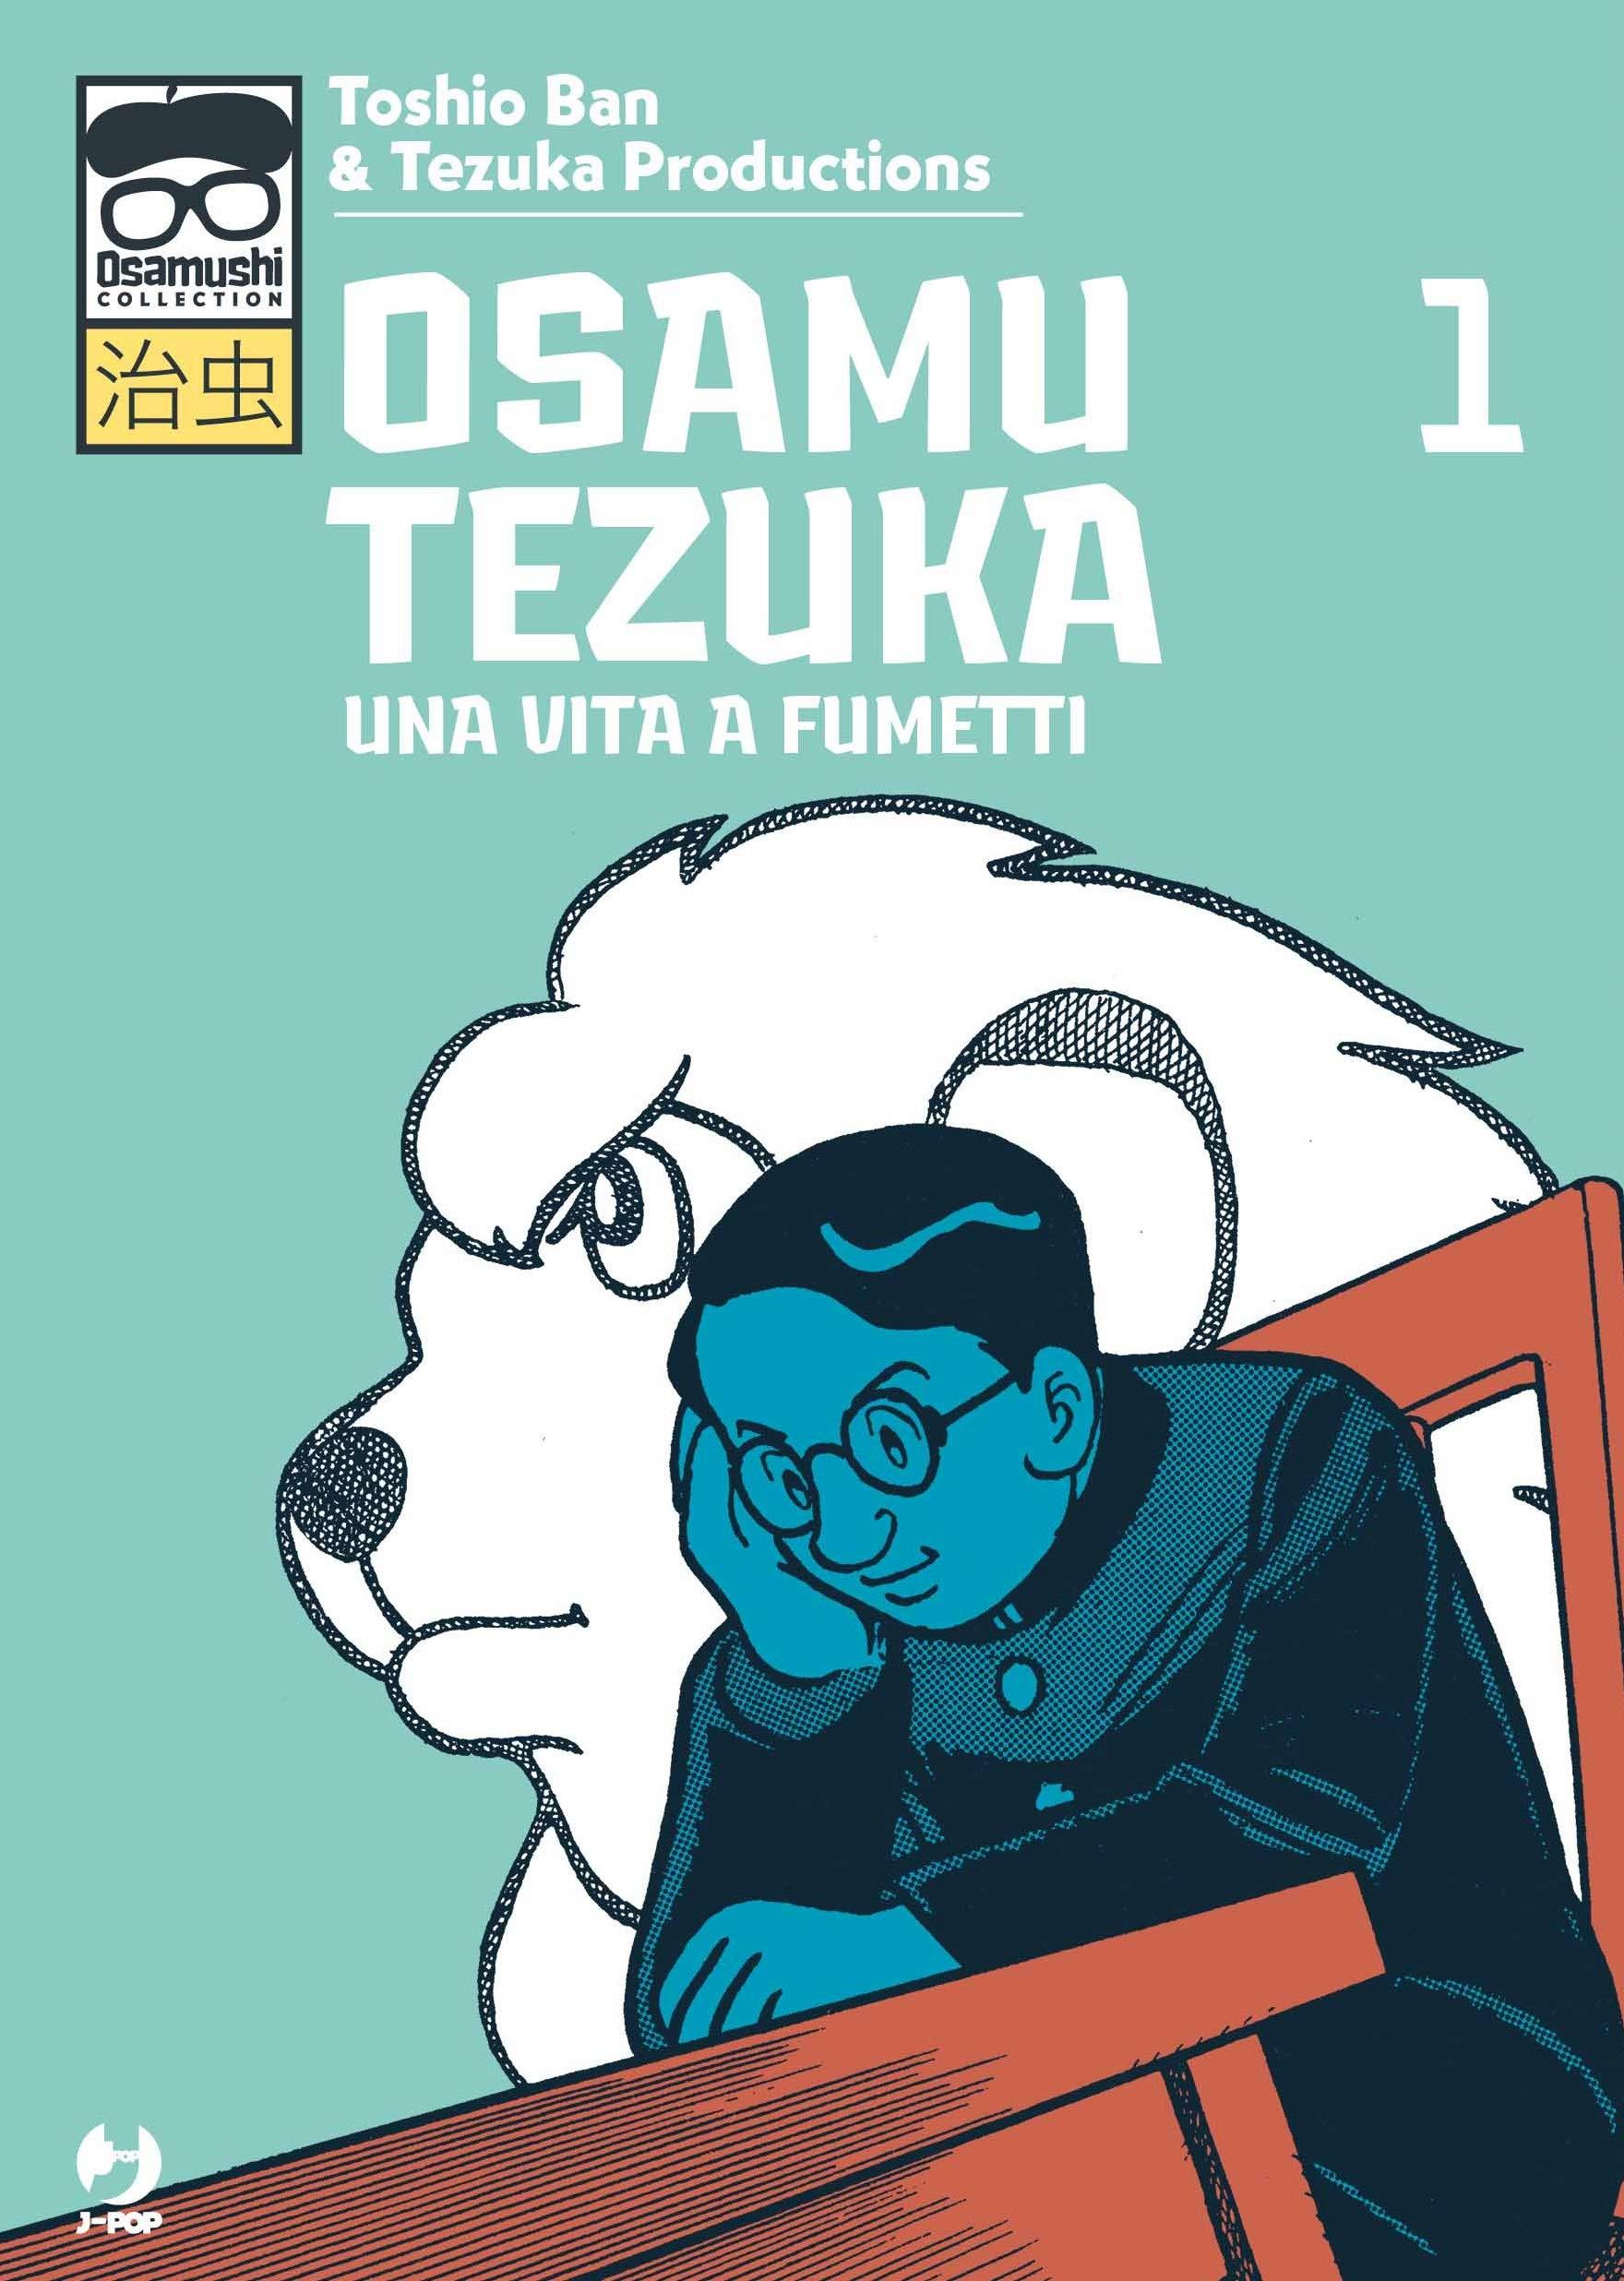 OSAMU  TEZUKA Una Vita a Fumetti - Osamushi Collection - J-Pop - 4 volumi Completa